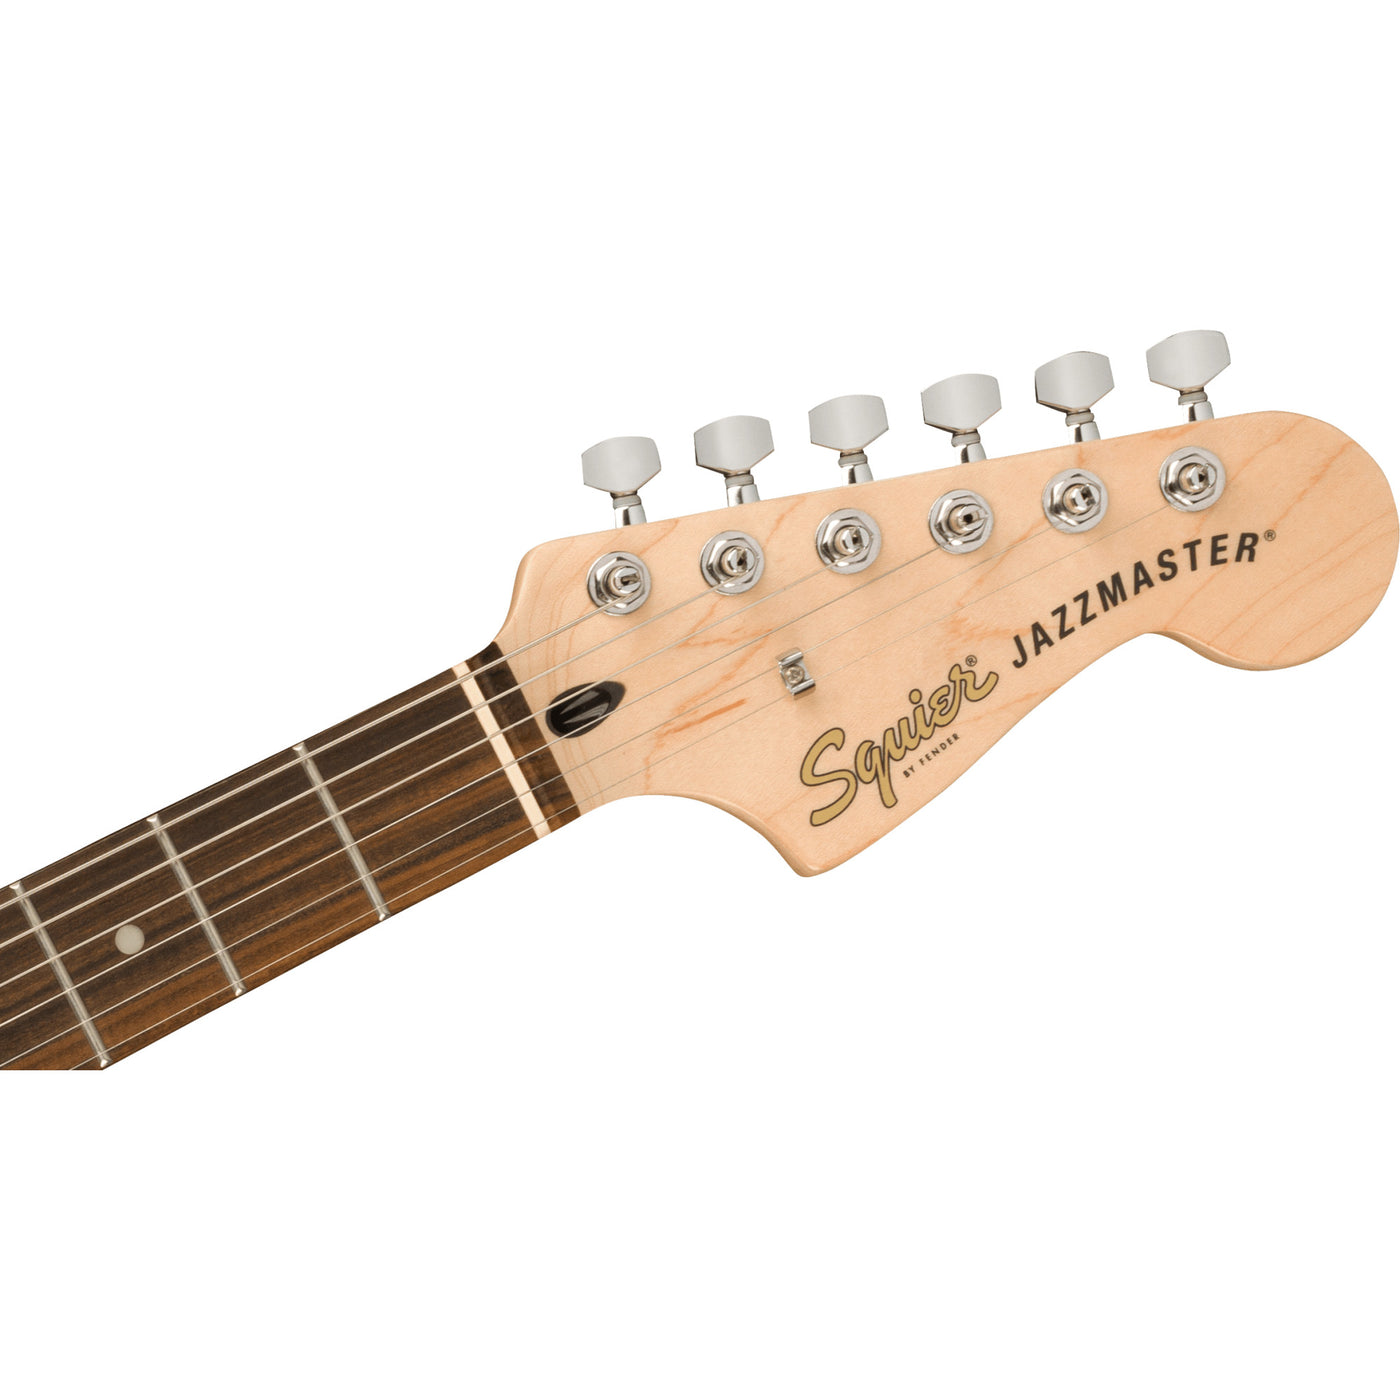 Fender Affinity Series Jazzmaster Electric Guitar, Burgundy Mist (0378300566)